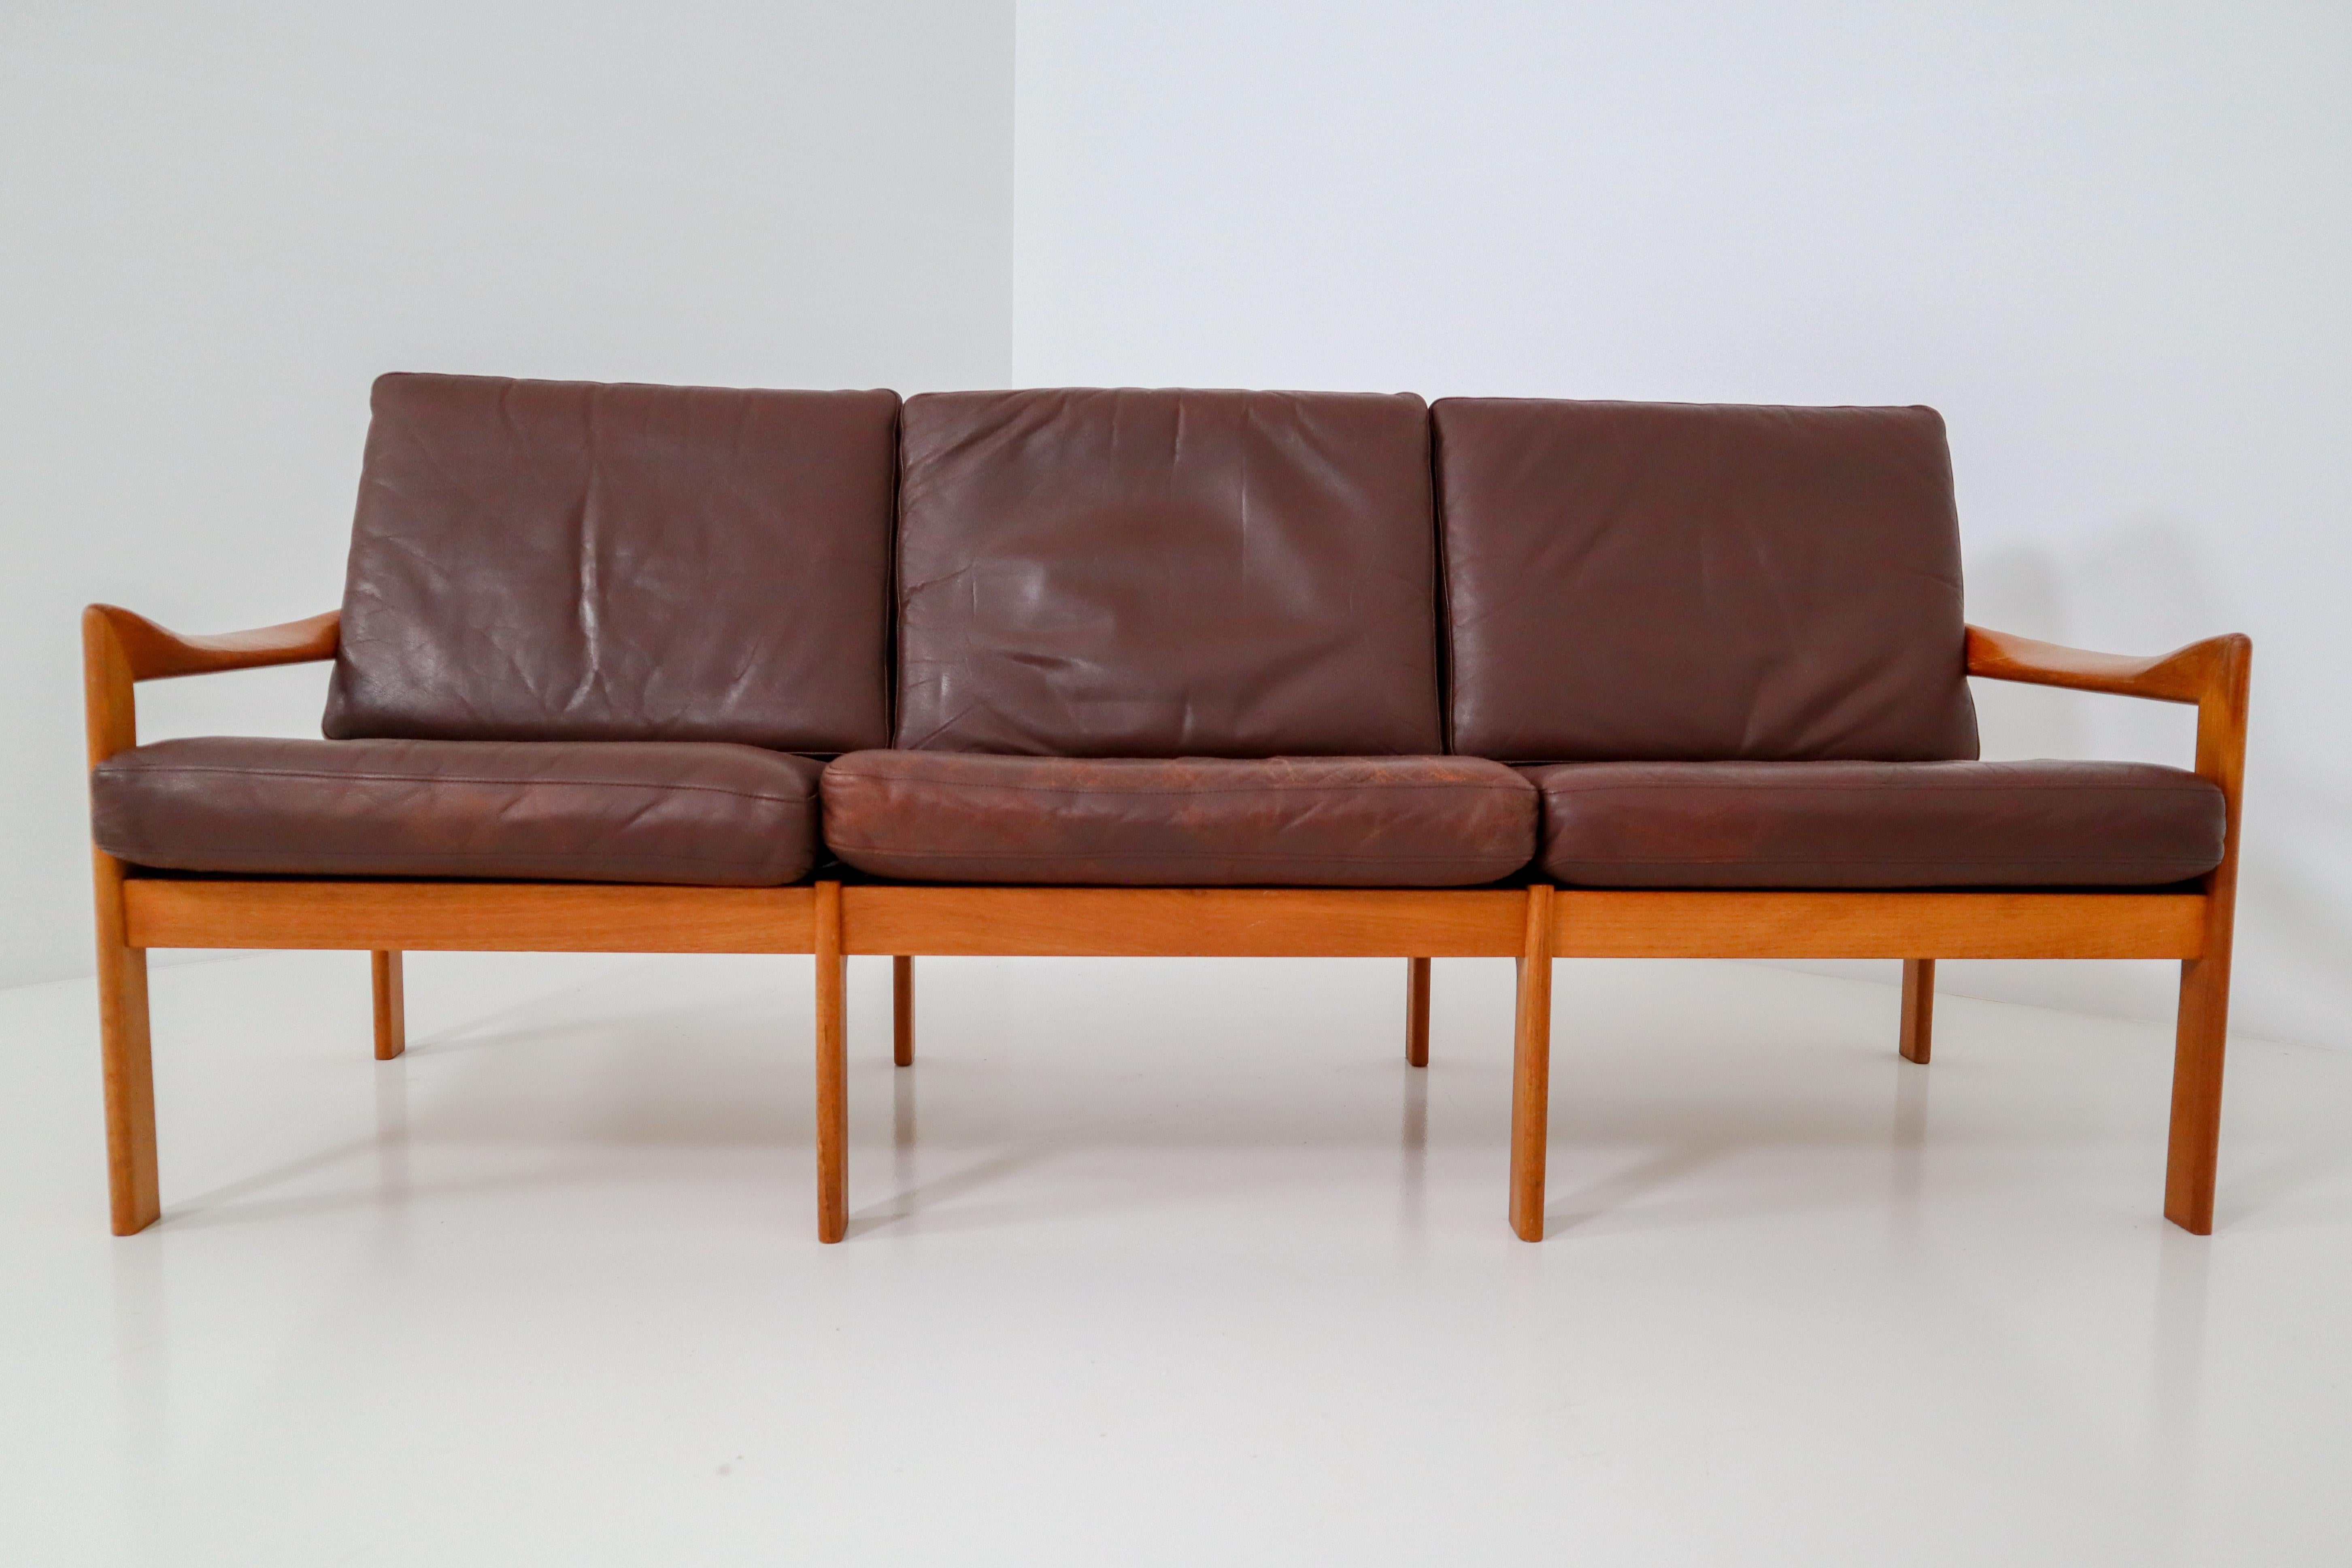 Scandinavian Modern Illum Wikkelso Three-Seat Teak Sofa, Danish, 1960s, Produced by Eilersen